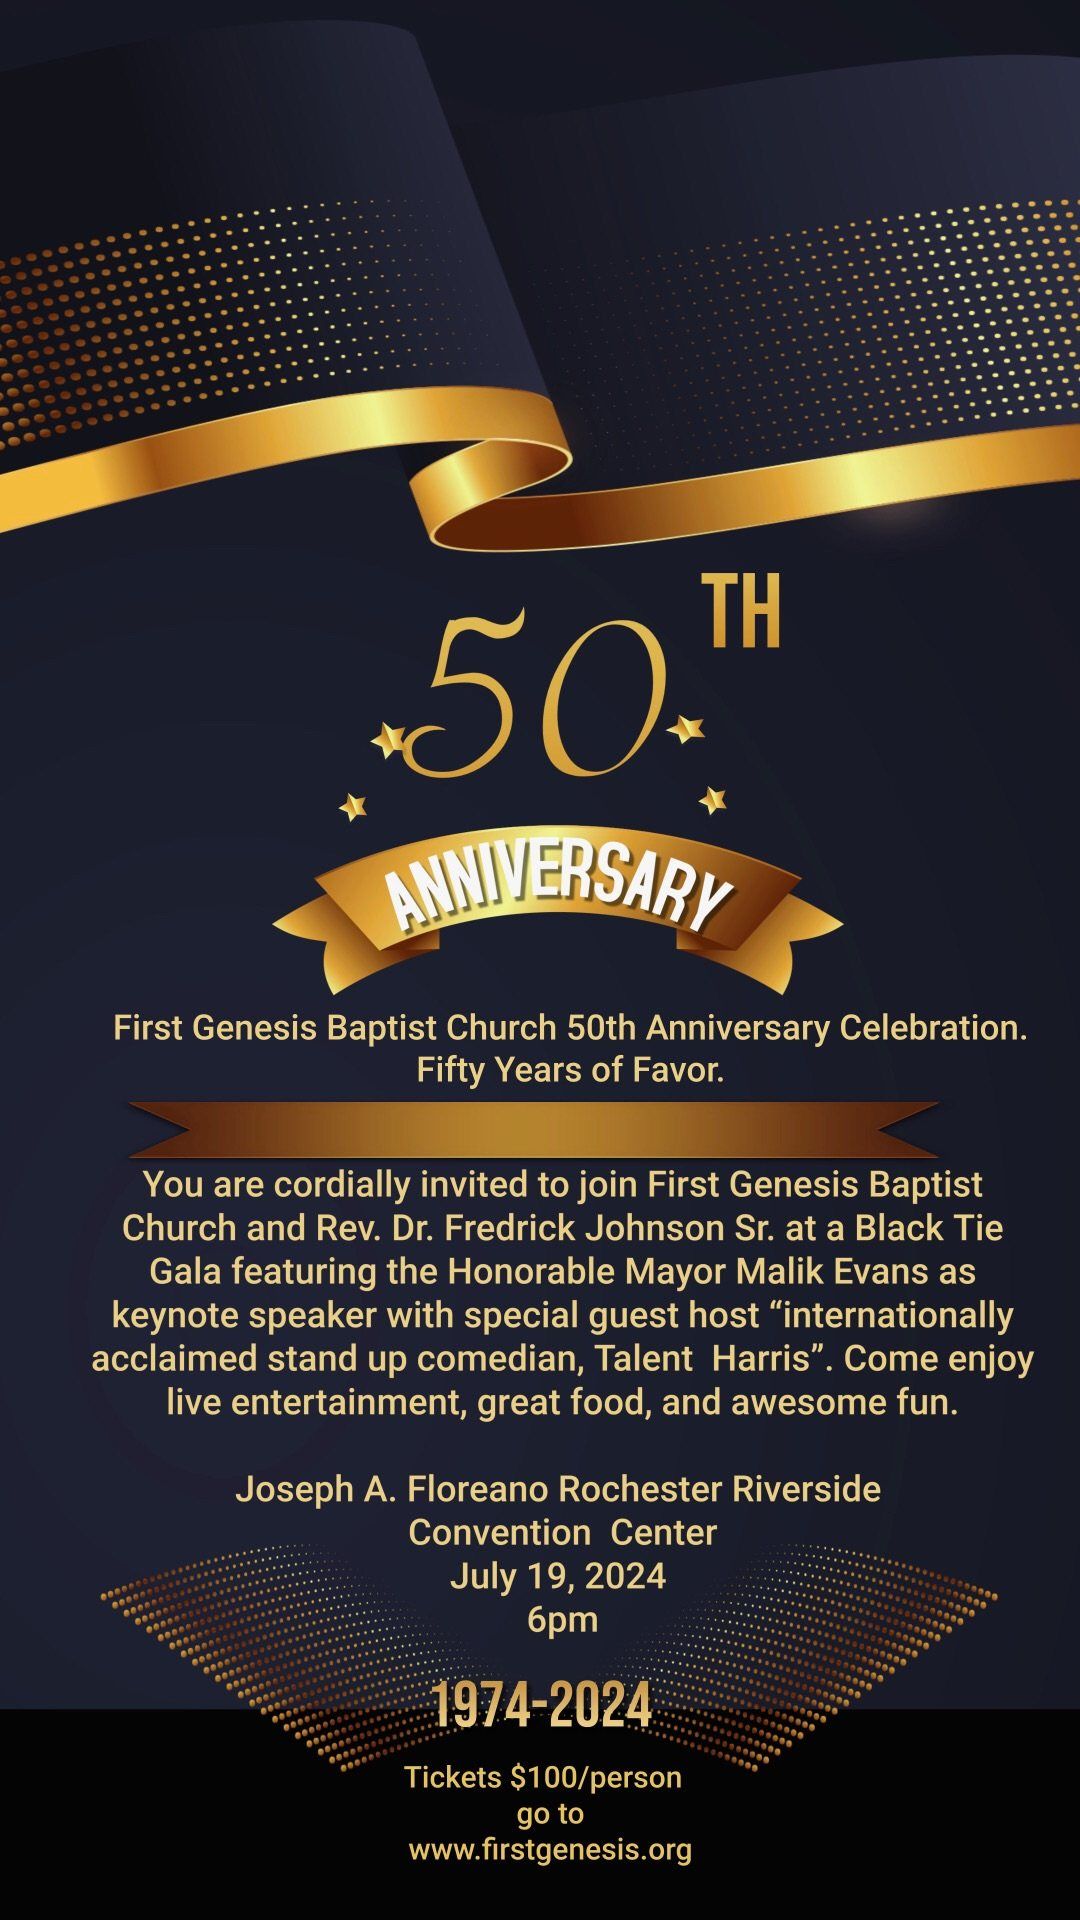 First Genesis Baptist Church 50th Anniversary Celebration Gala